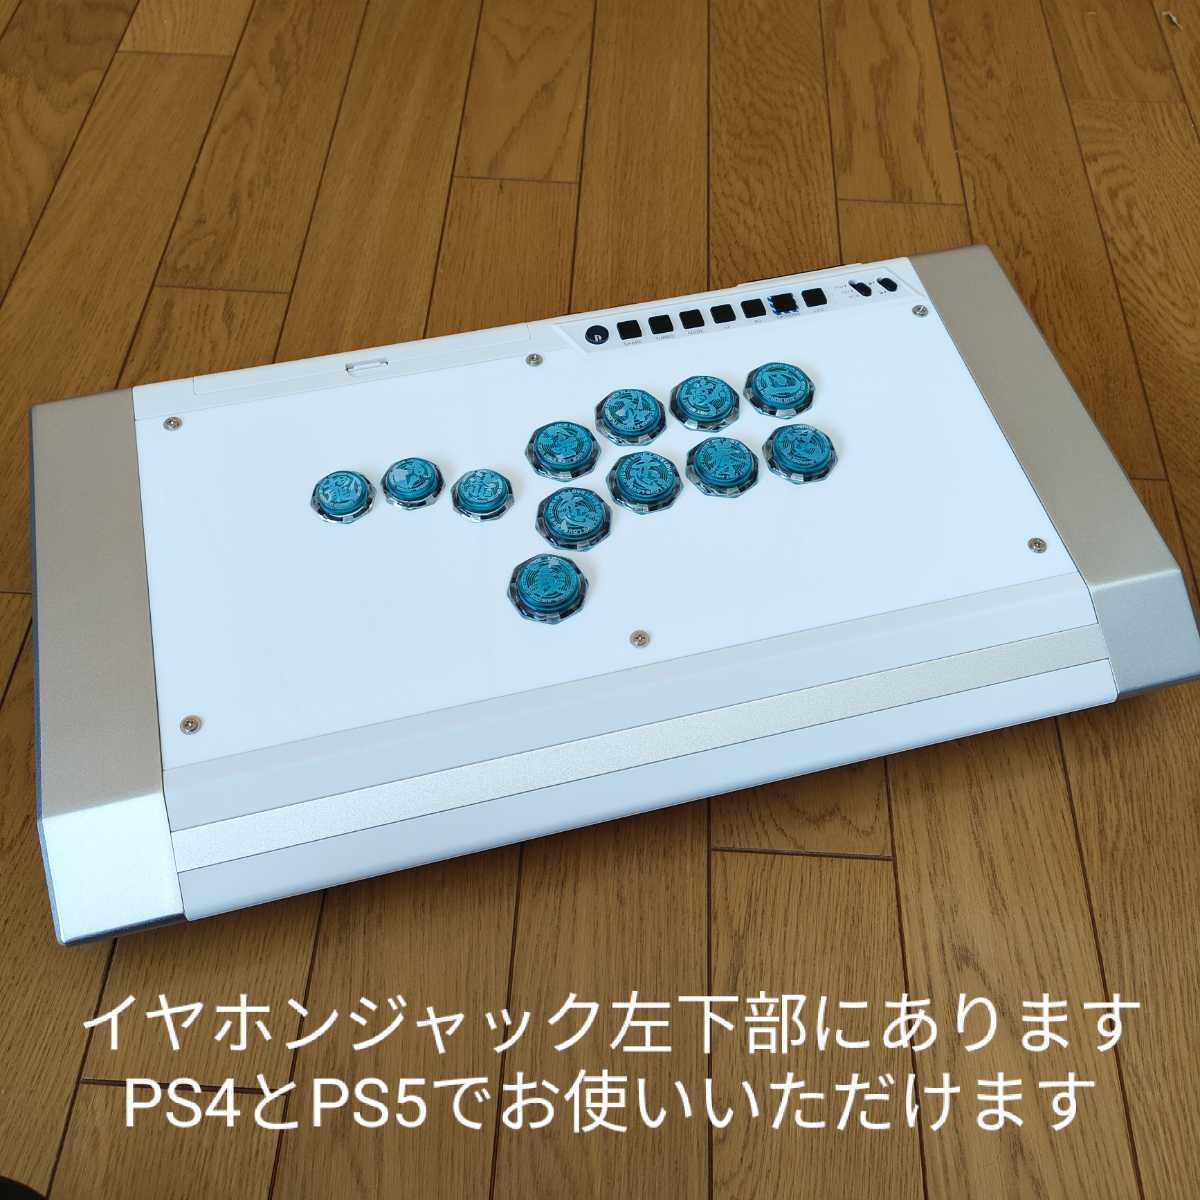 QANBA Pearl hitbox アケコン ヒットボックス レバーレス PS4 